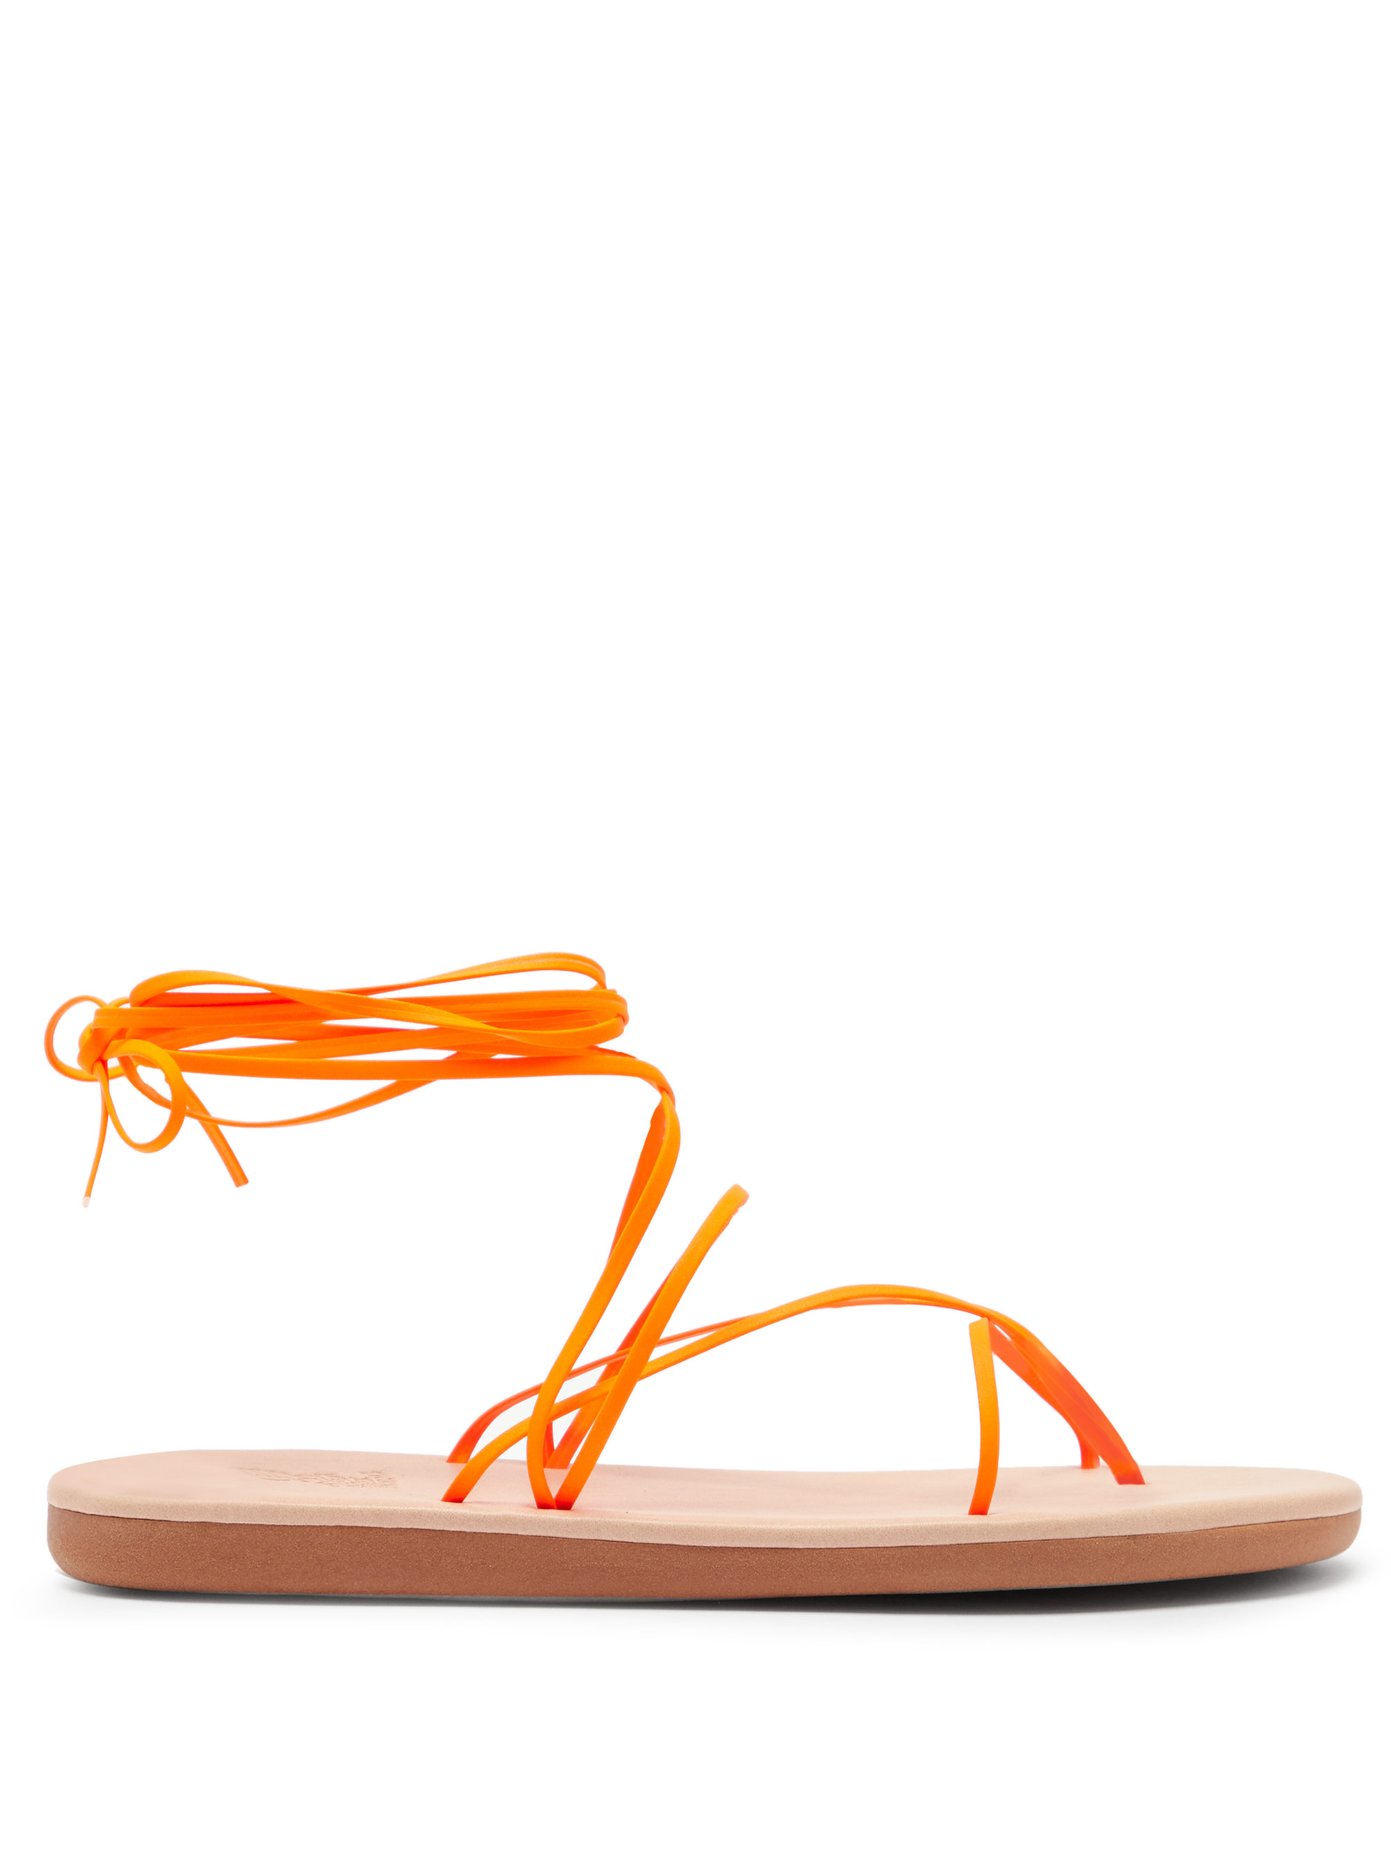 ancient greek rubber sandals